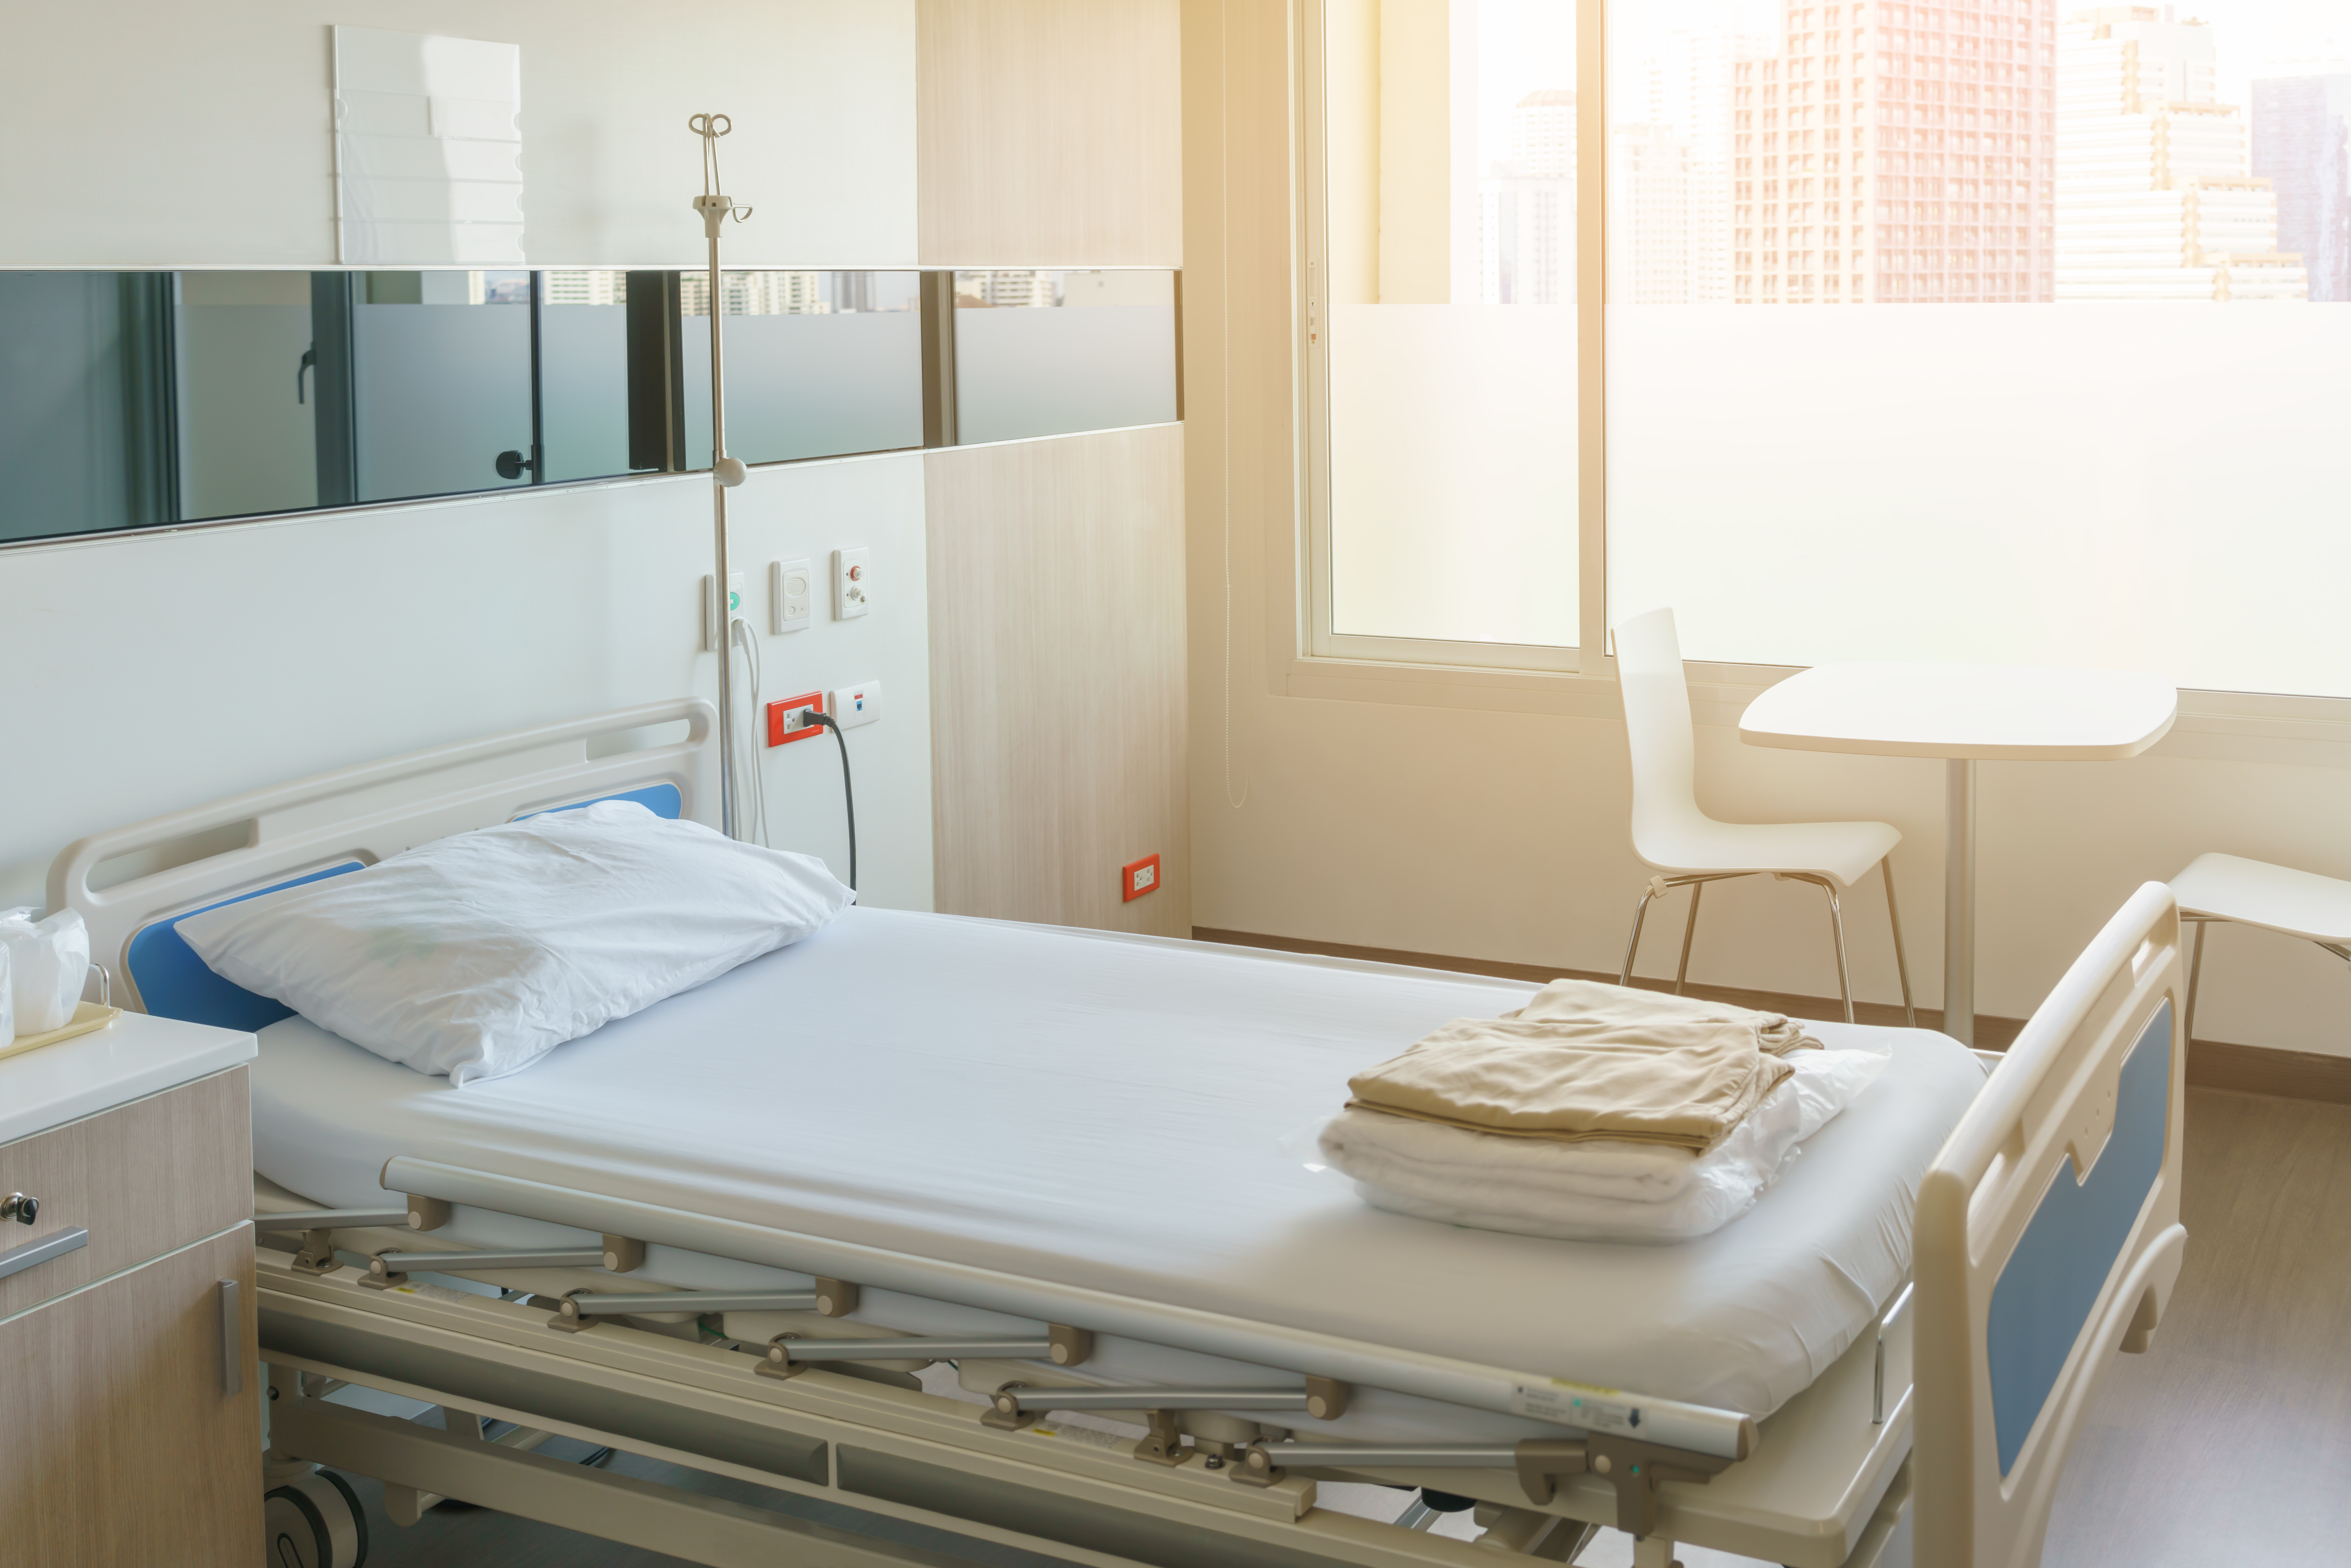 Bariatric beds for plus size patients - Arjo